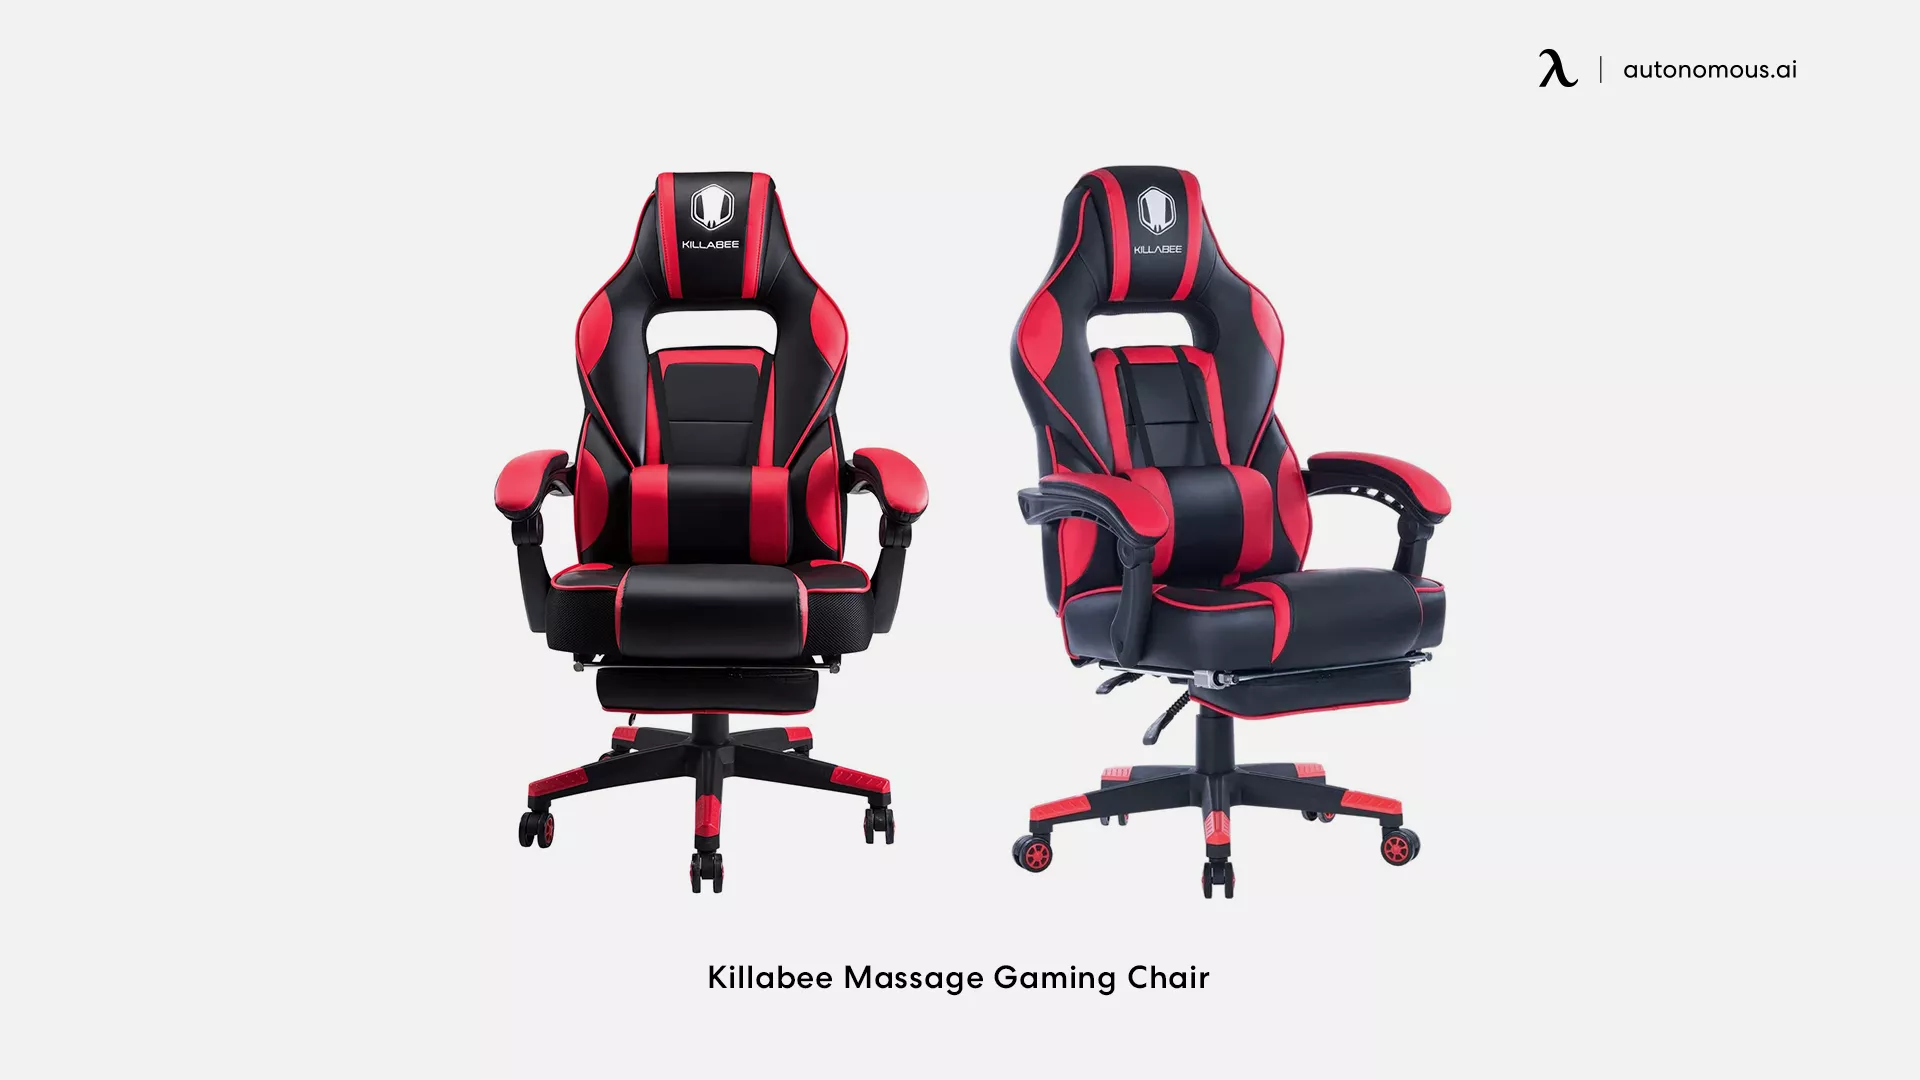 Killabee Massage Gaming Chair